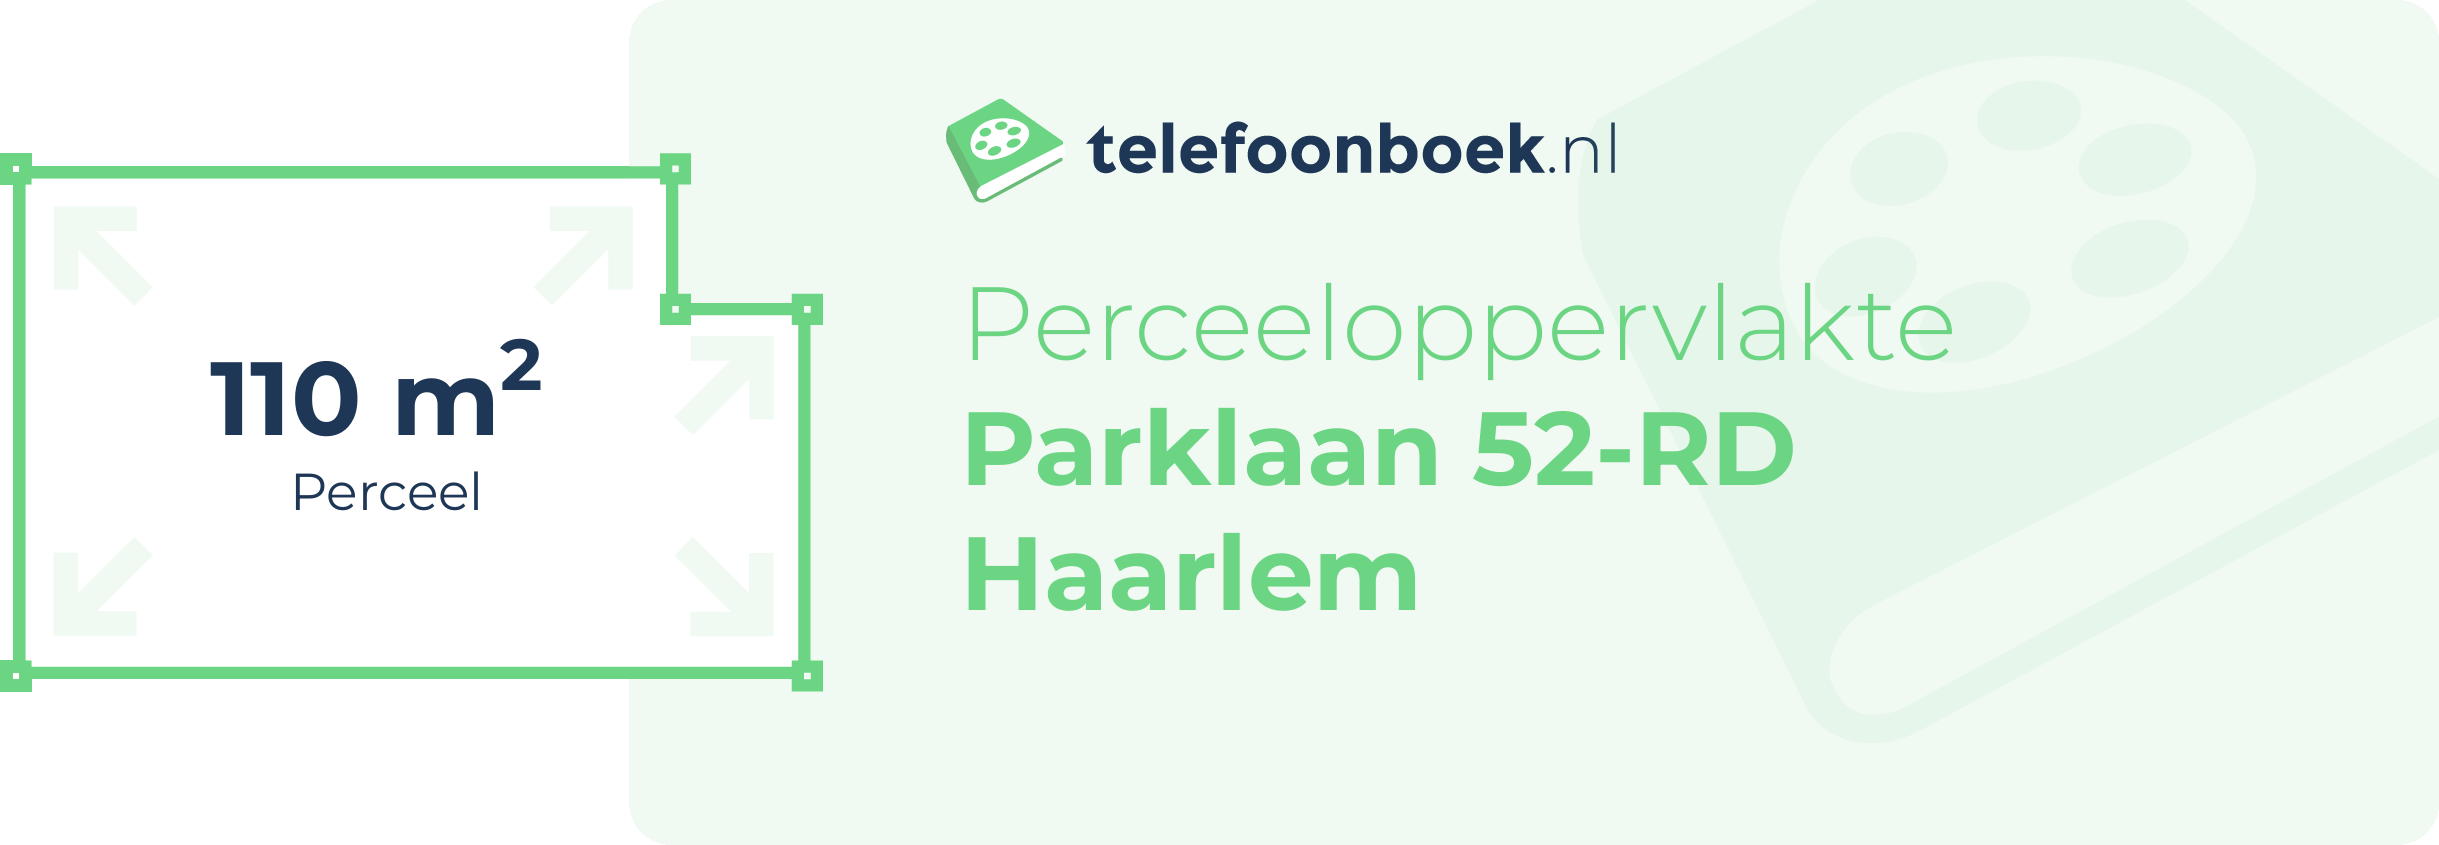 Perceeloppervlakte Parklaan 52-RD Haarlem